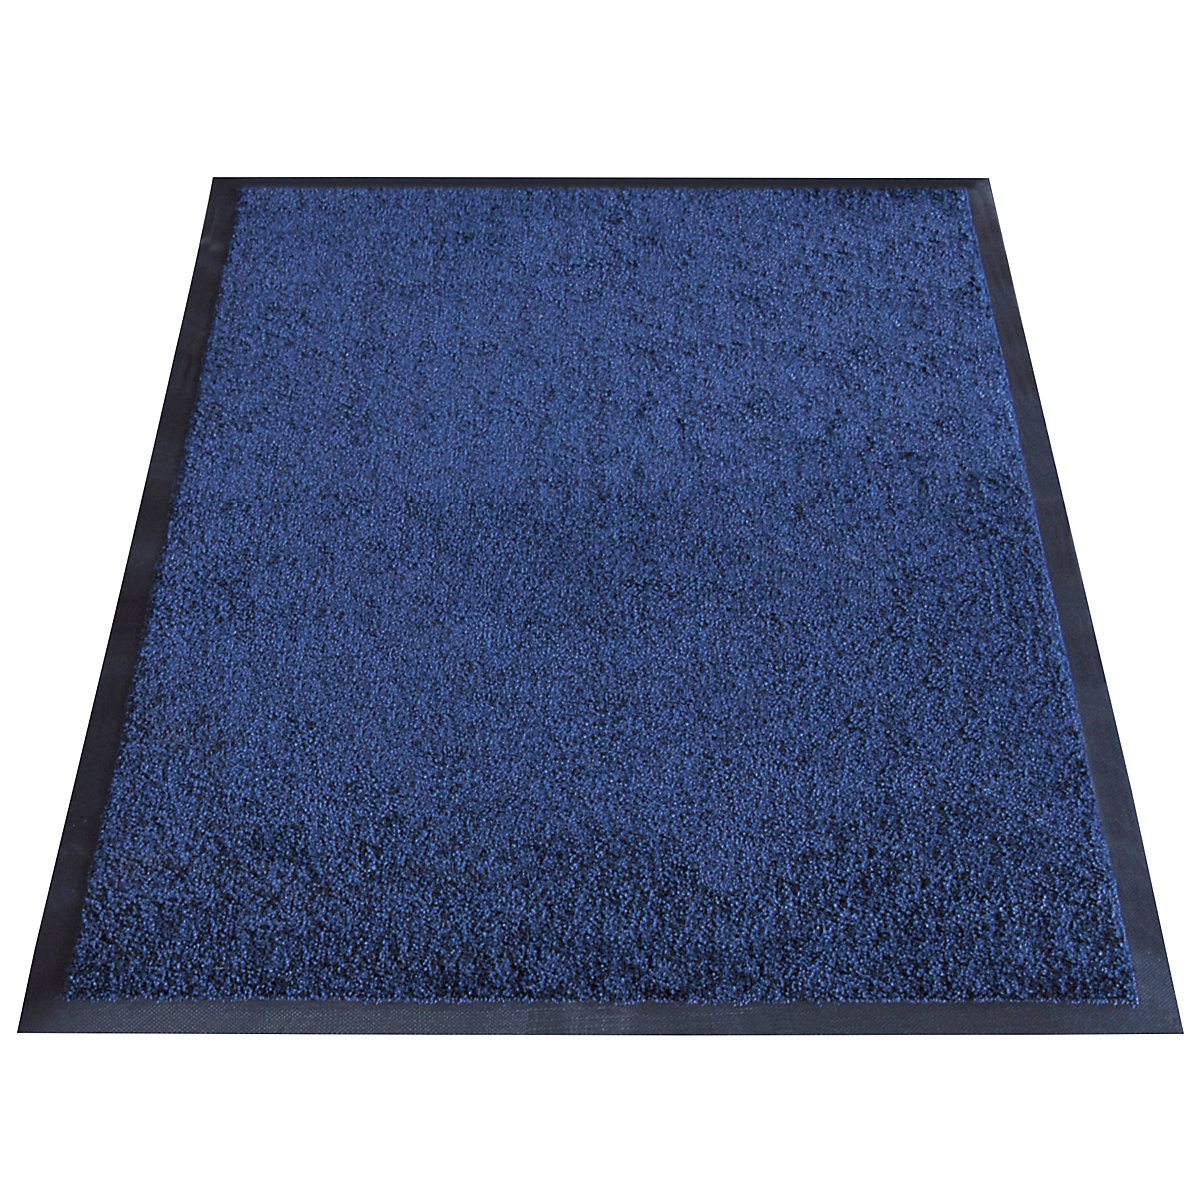 EAZYCARE WASH entrance matting, LxW 850 x 600 mm, blue